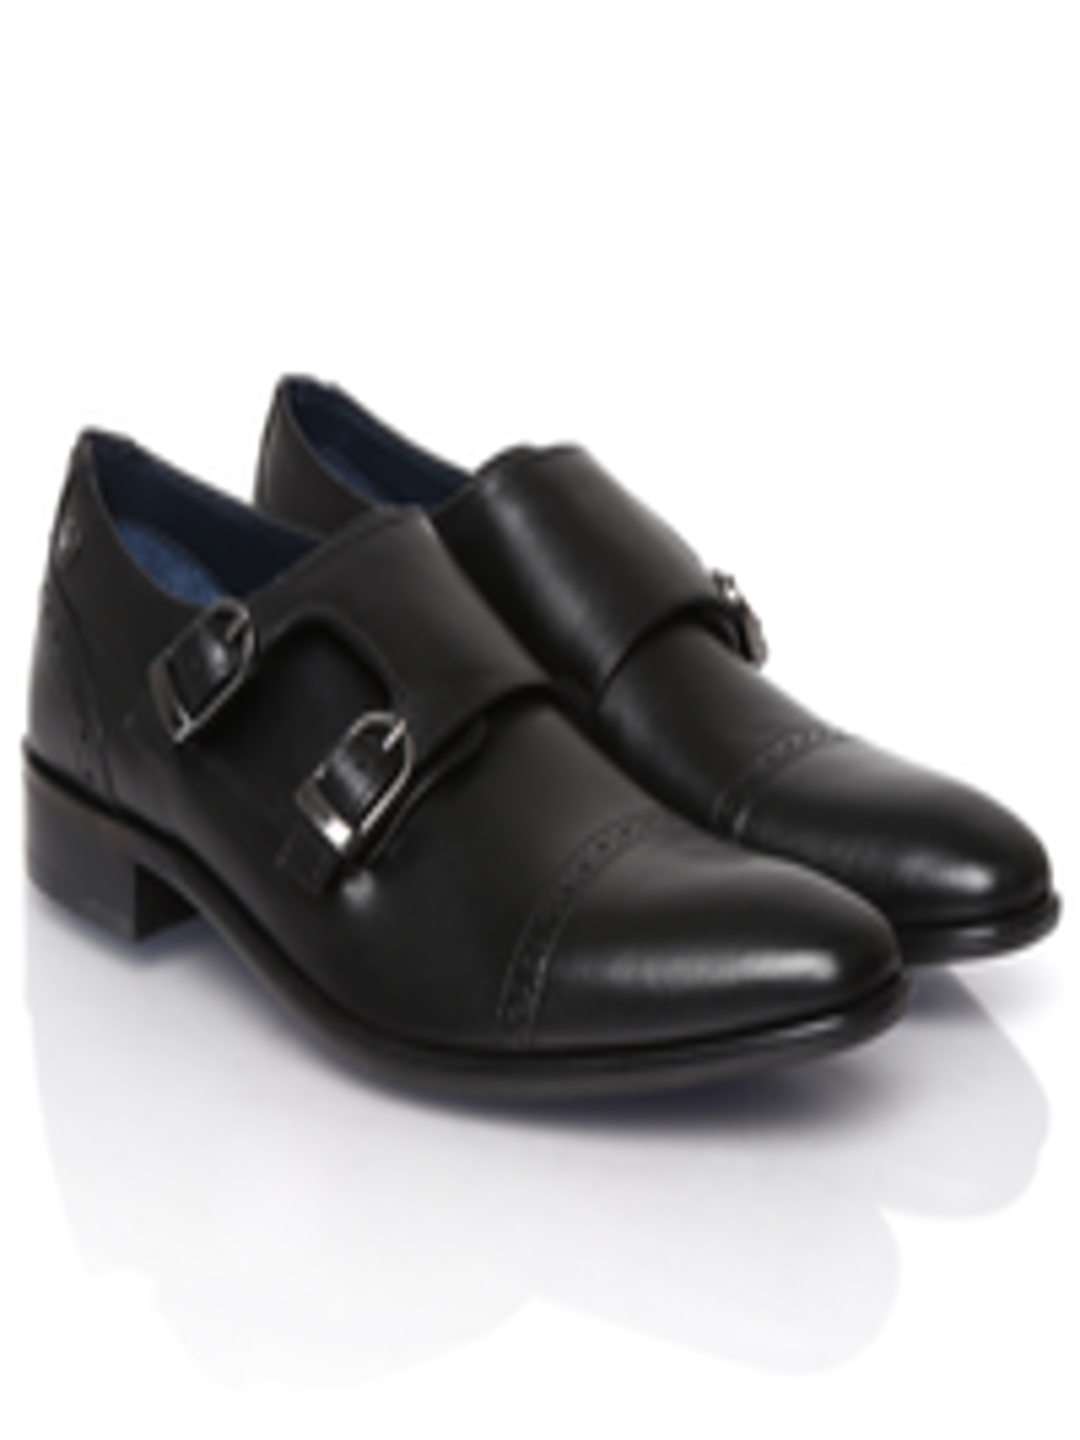 Buy Louis Philippe Men Black Leather Semiformal Shoes - Formal Shoes ...